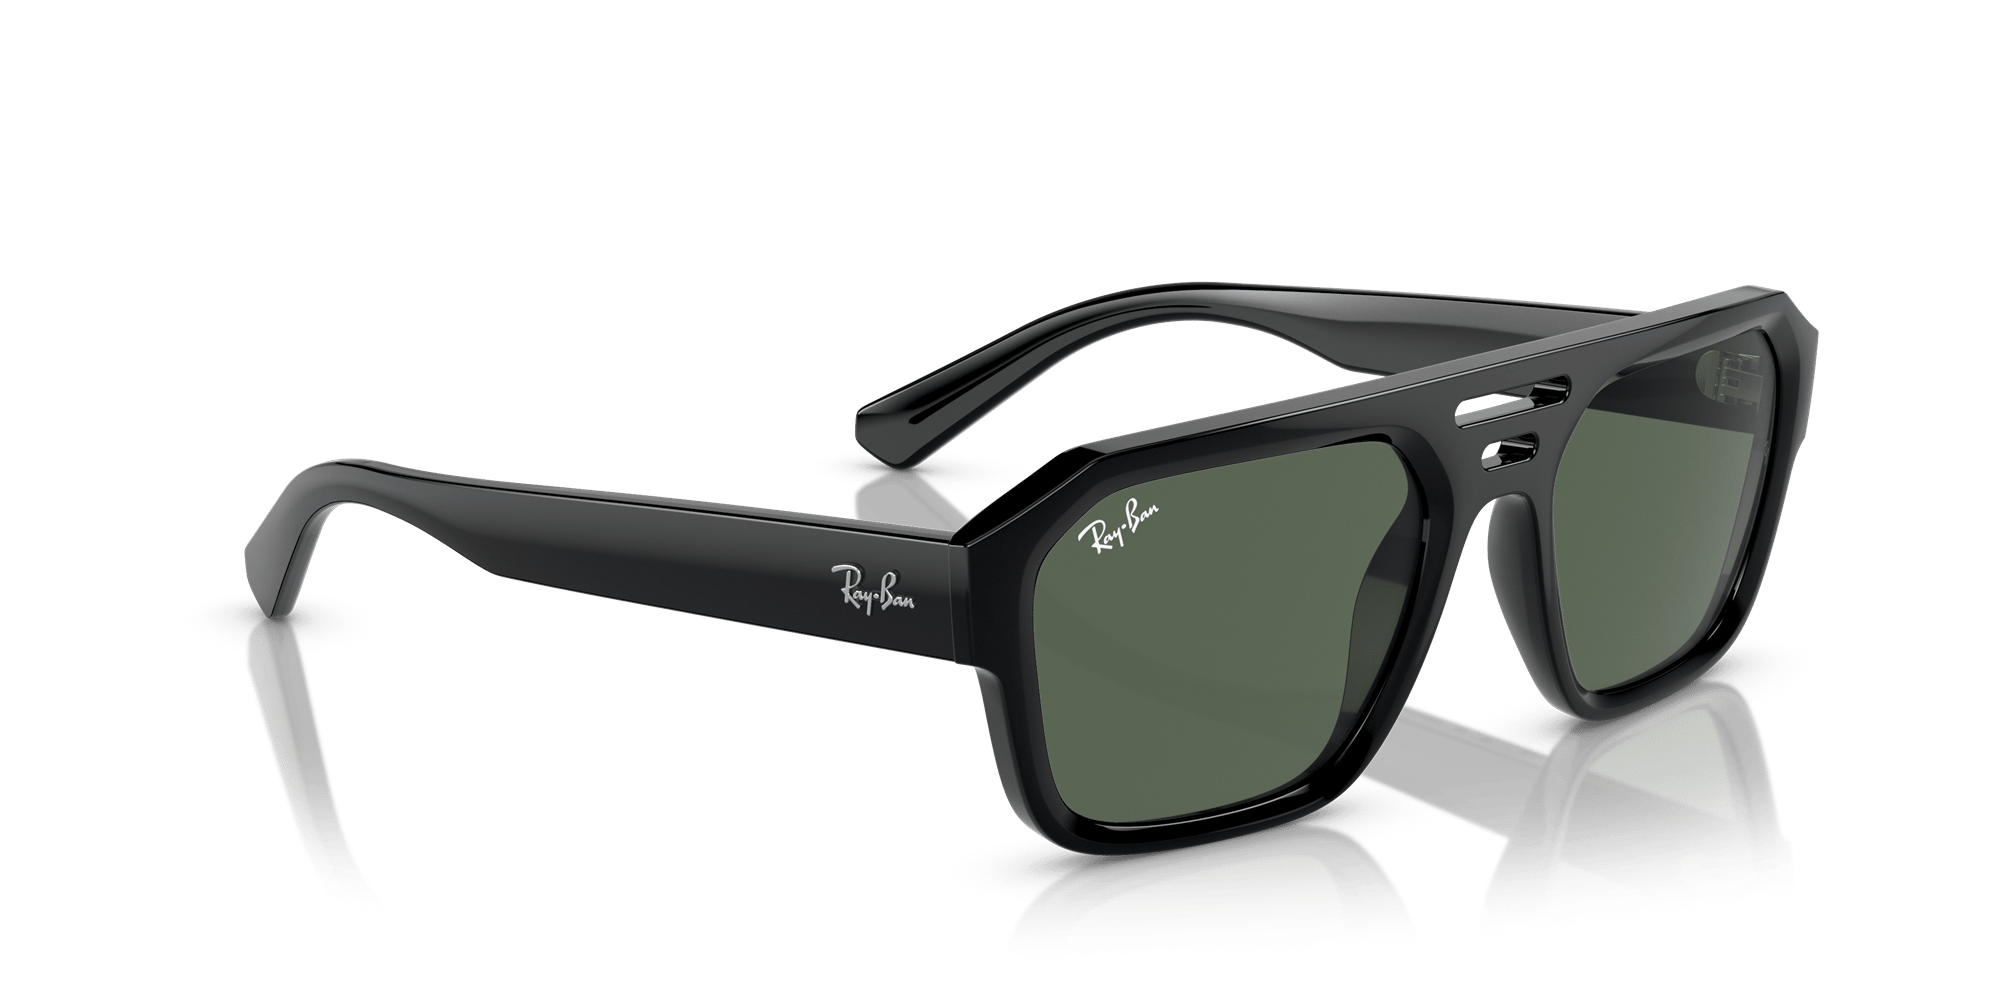 Ray-Ban RB 4397 sunglasses